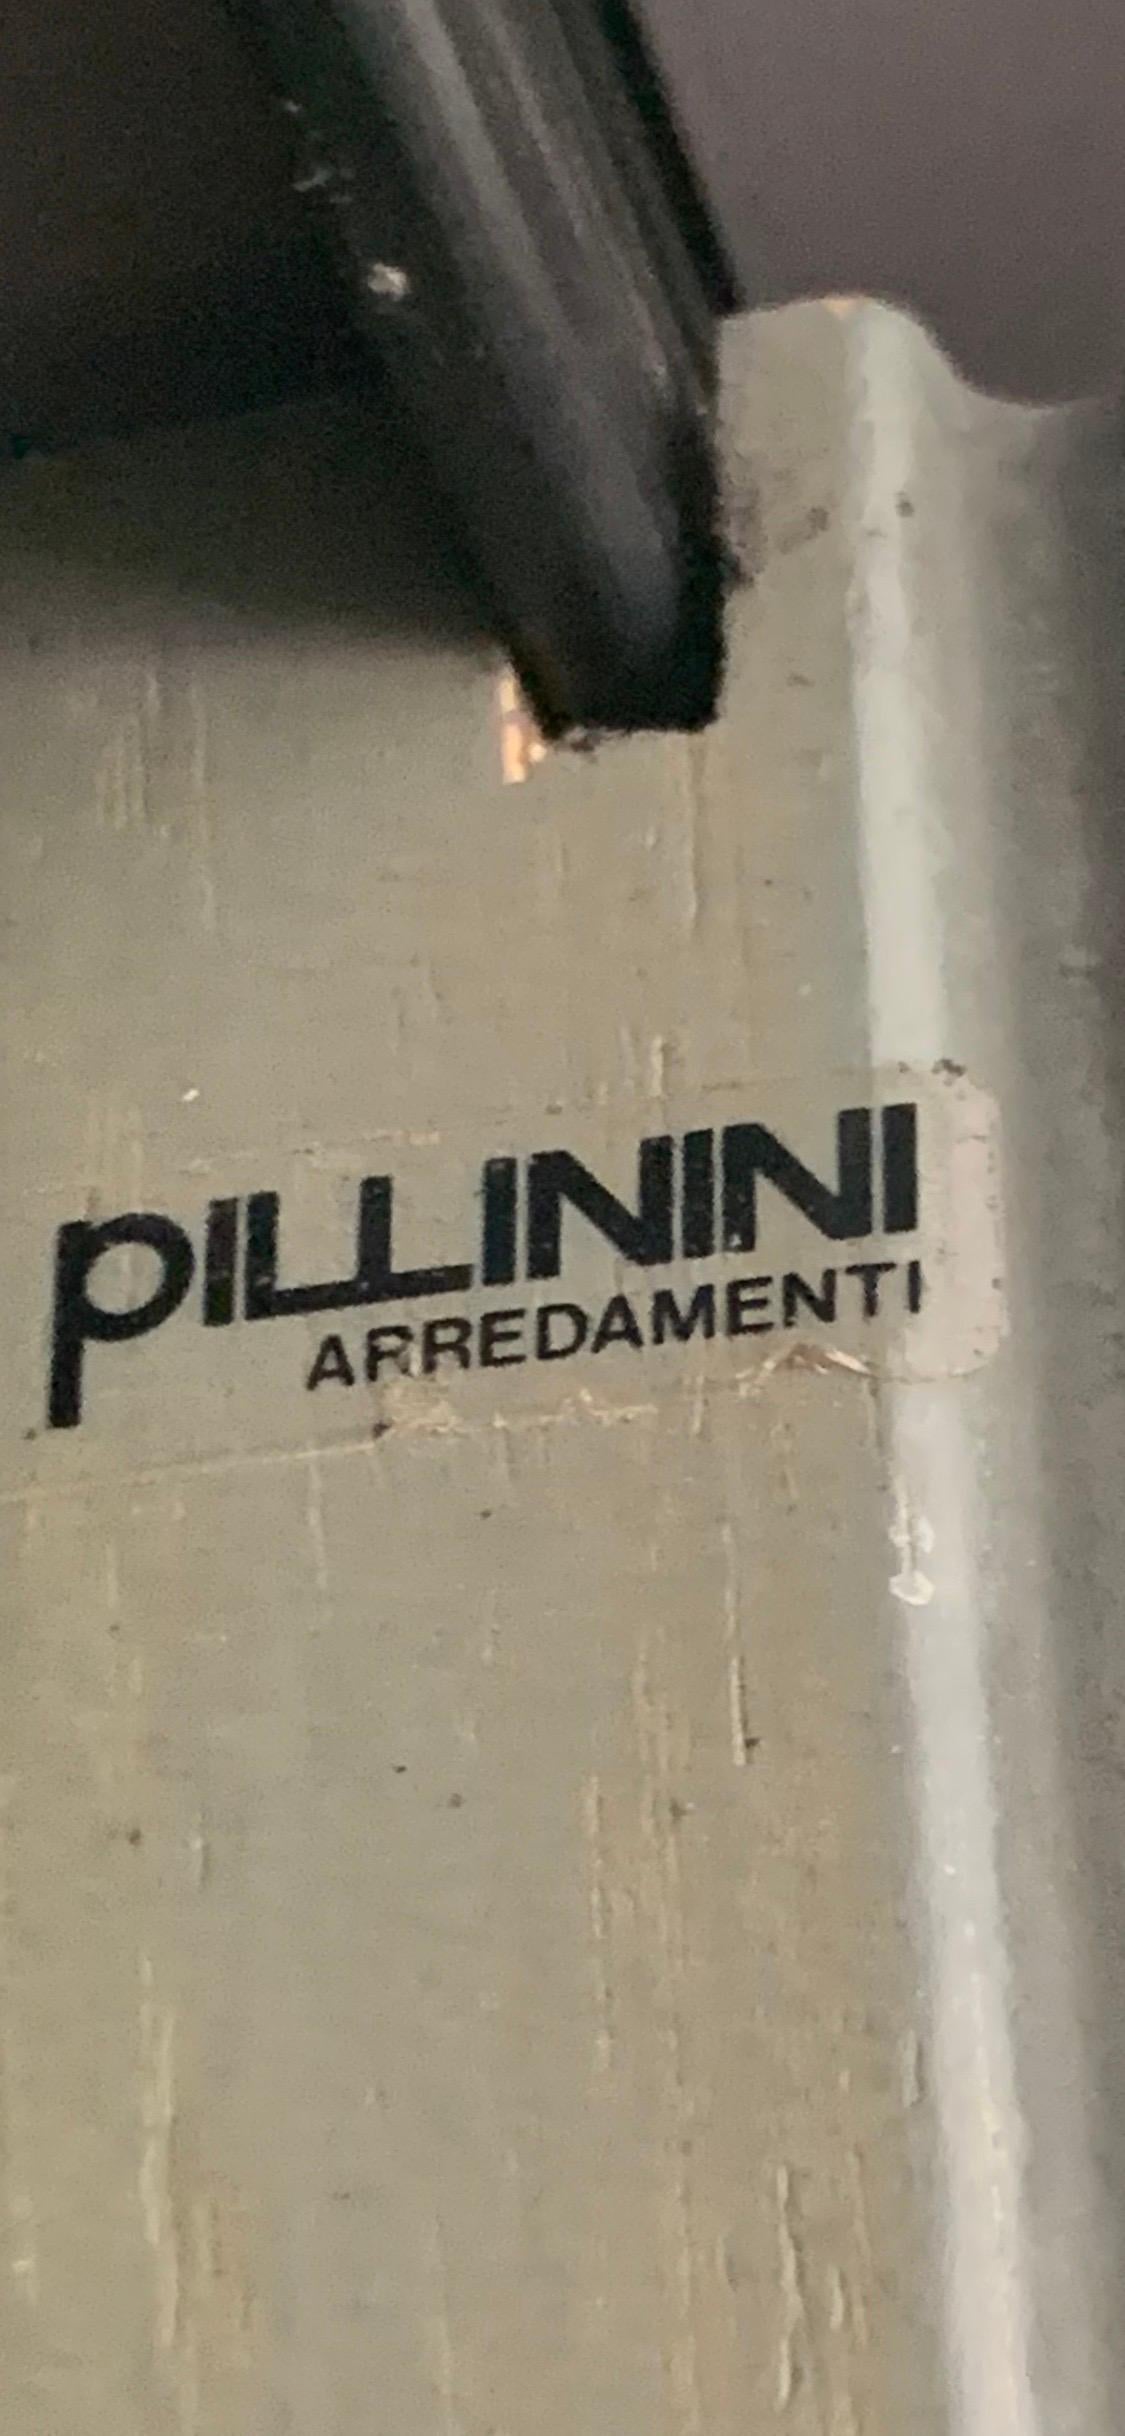 Metal Mid-Century Modern Signed Arredamenti Pillinini Tall Borsani Credenza Wardrobe